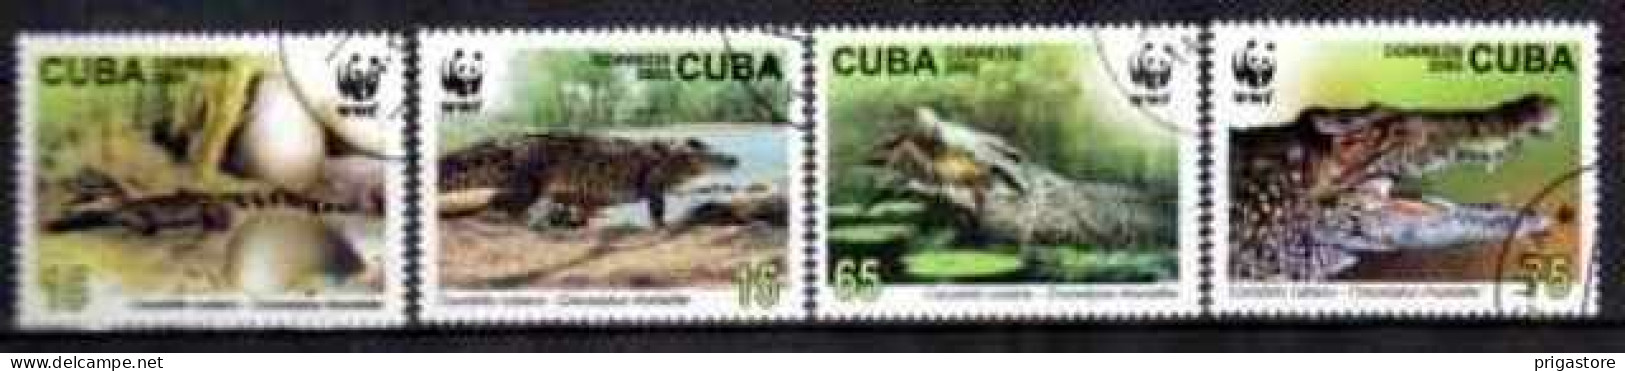 Cuba 2003 Animaux Crocodiles (19) Yvert N° 4117 à 4120 Oblitéré Used - Gebruikt